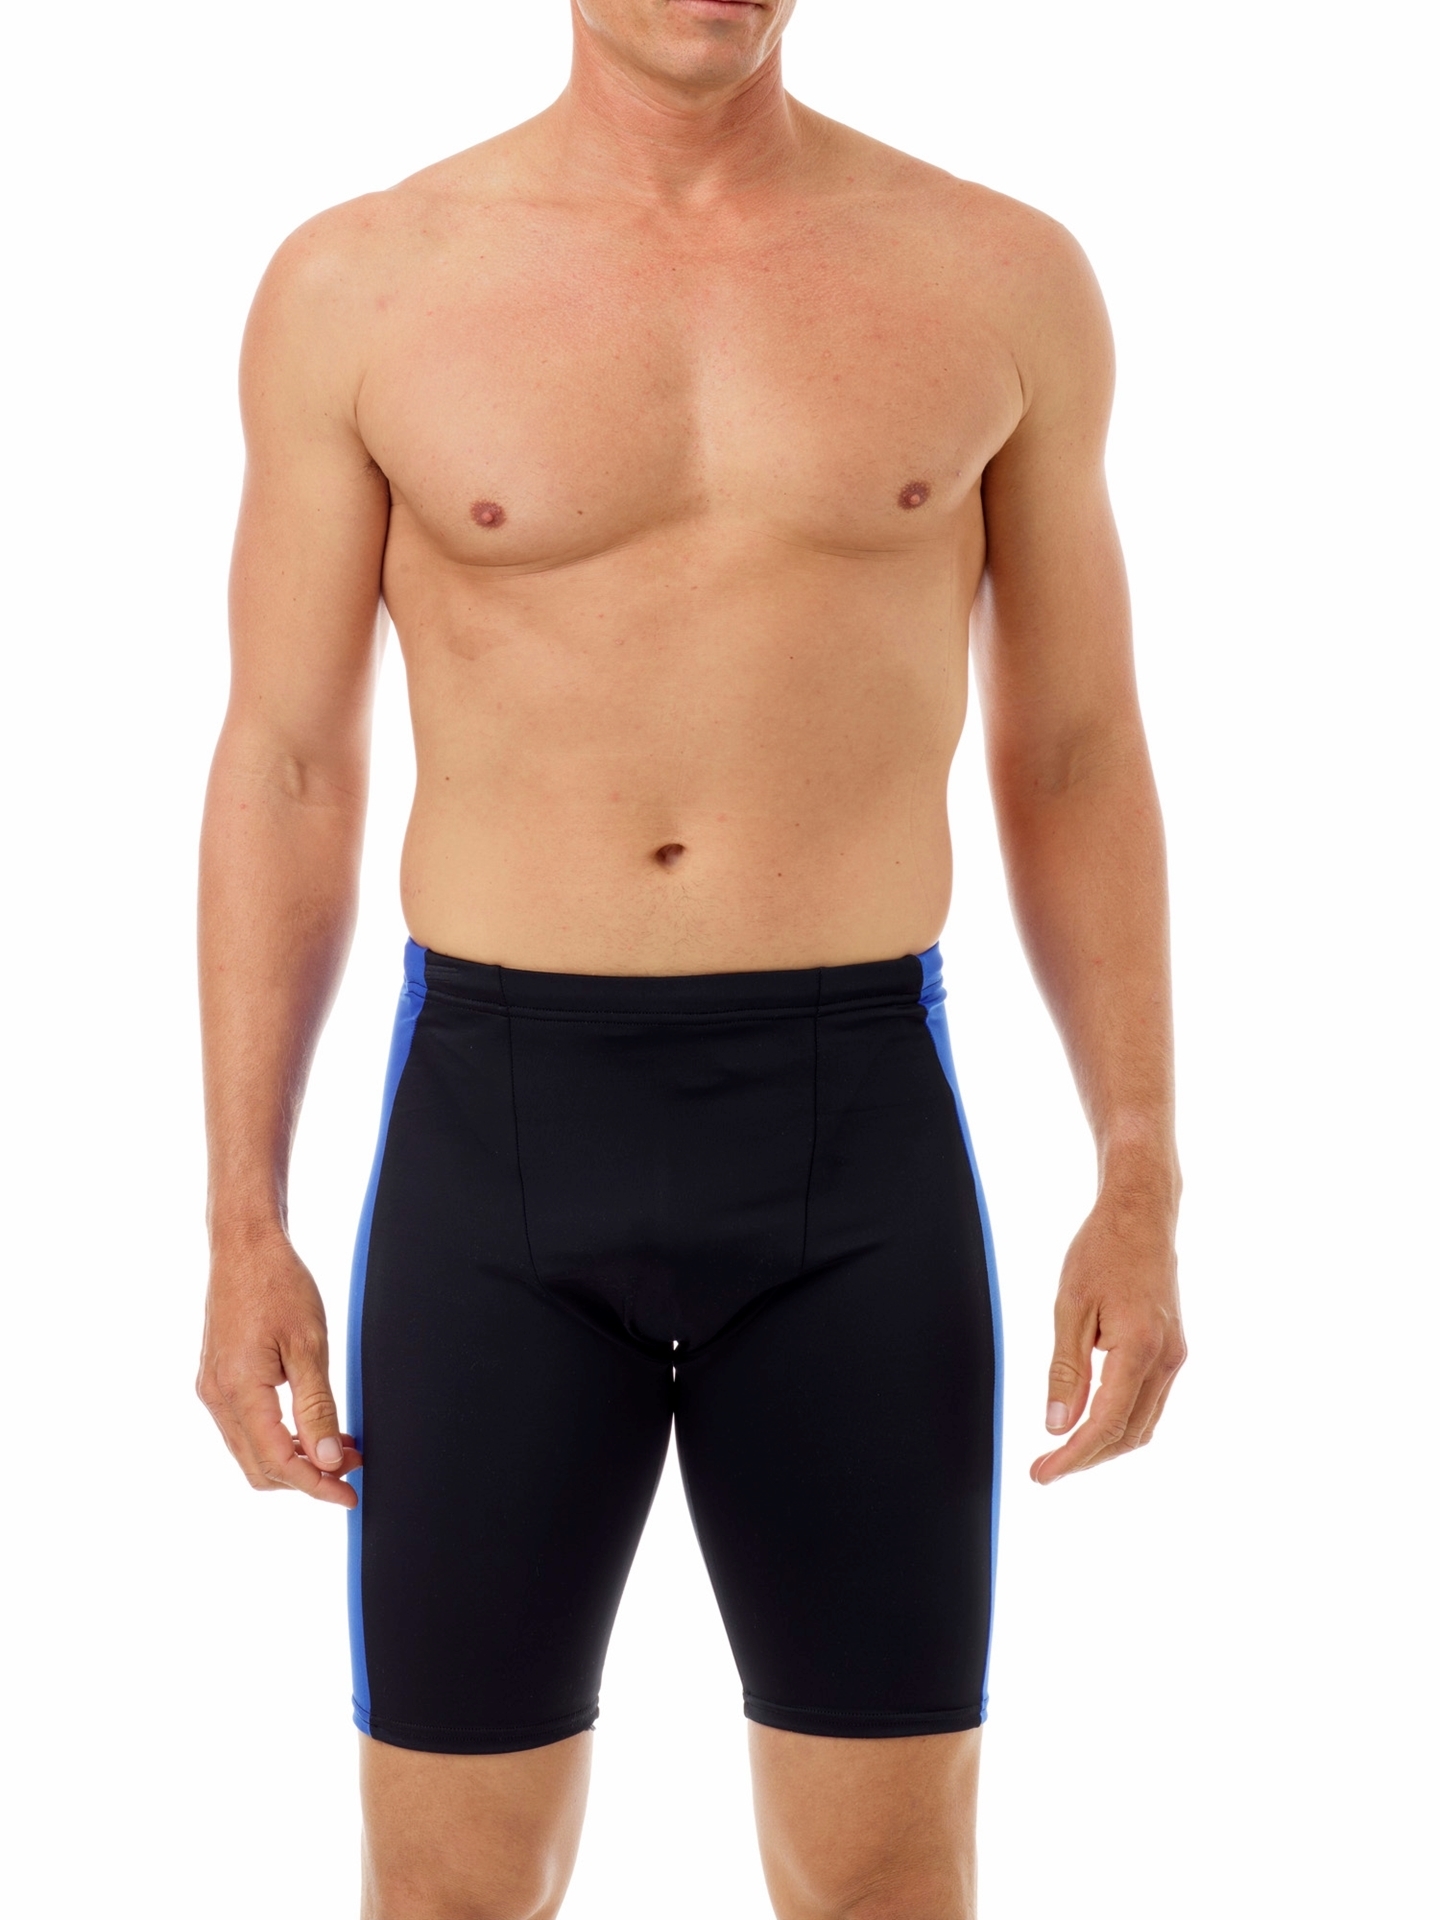 https://www.underworks.com/images/thumbs/0001596_mens-ultra-light-compression-swim-shorts.jpeg